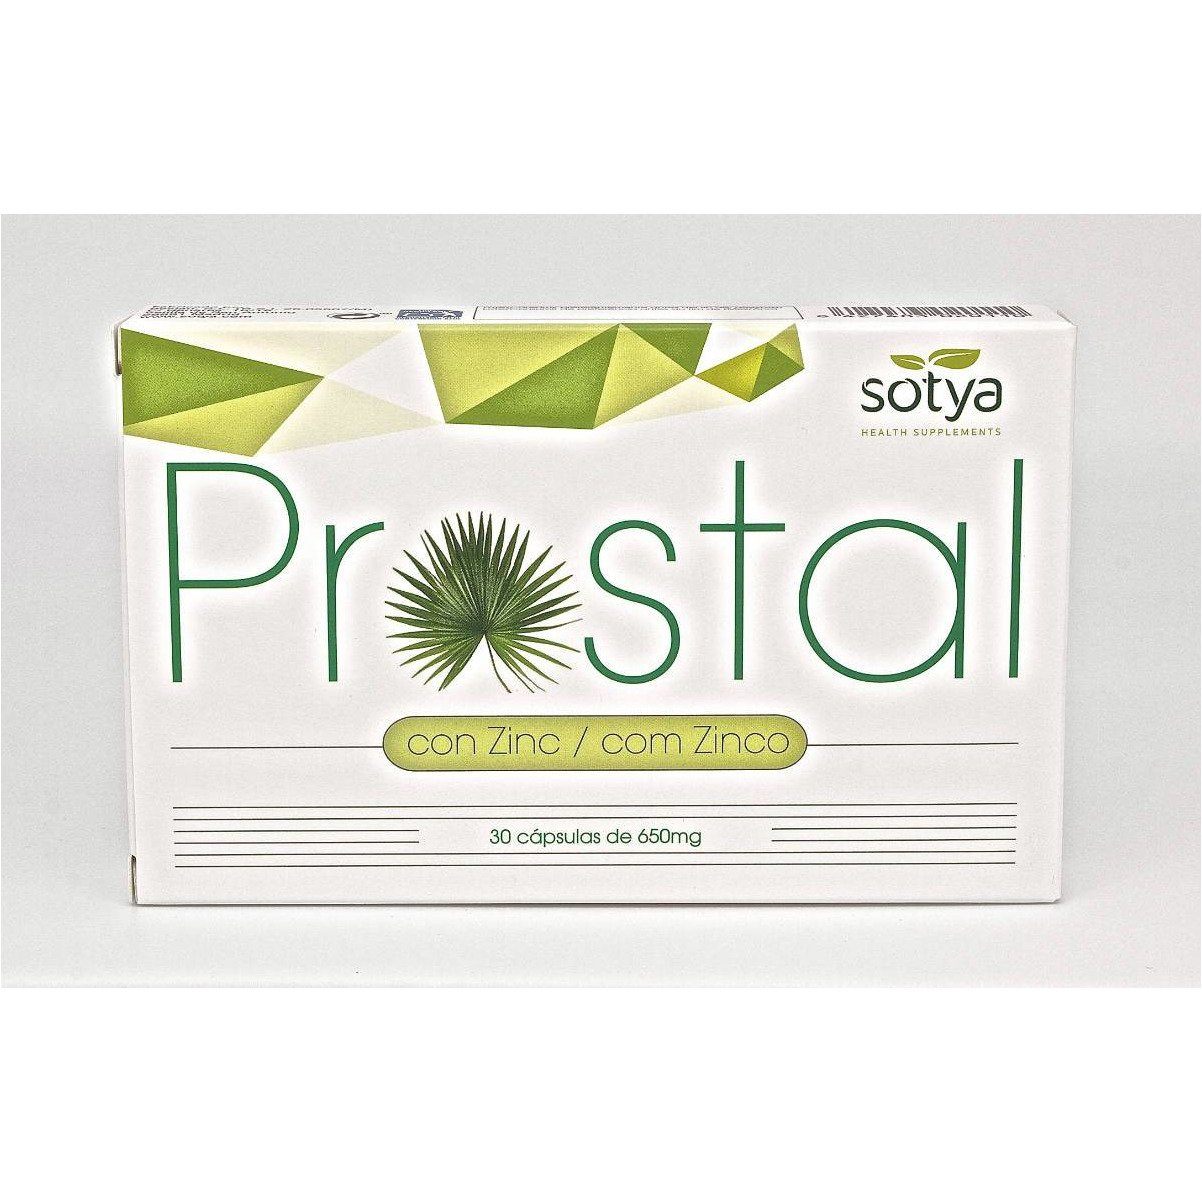 Prostal 650 mg 30 Capsulas | Sotya - Dietetica Ferrer